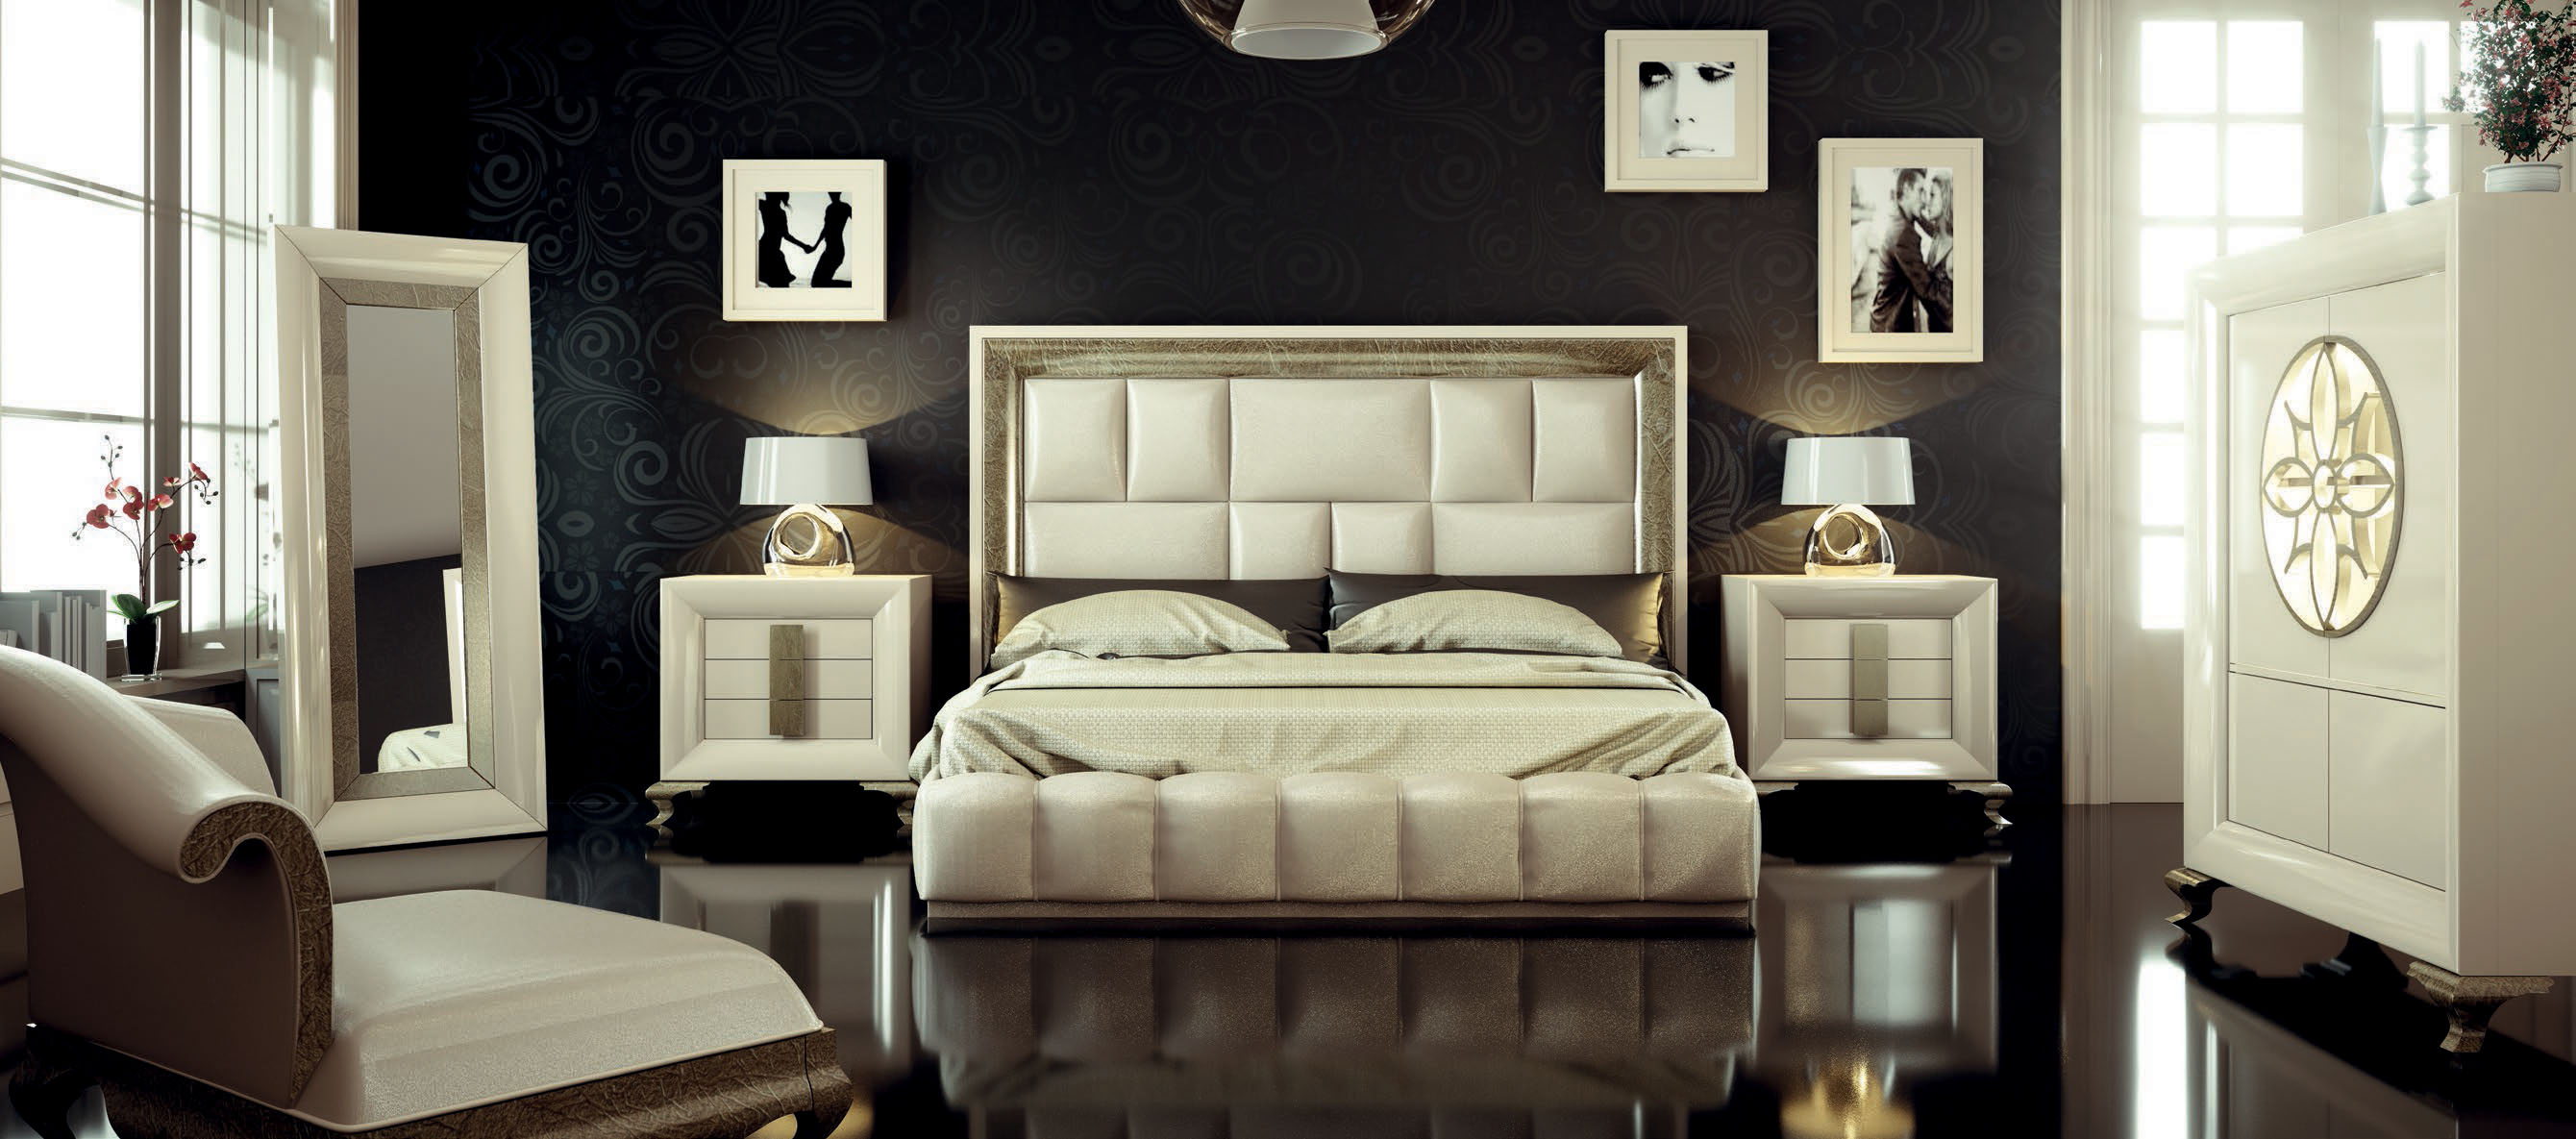 Brands Franco Furniture Bedrooms vol3, Spain DOR 148